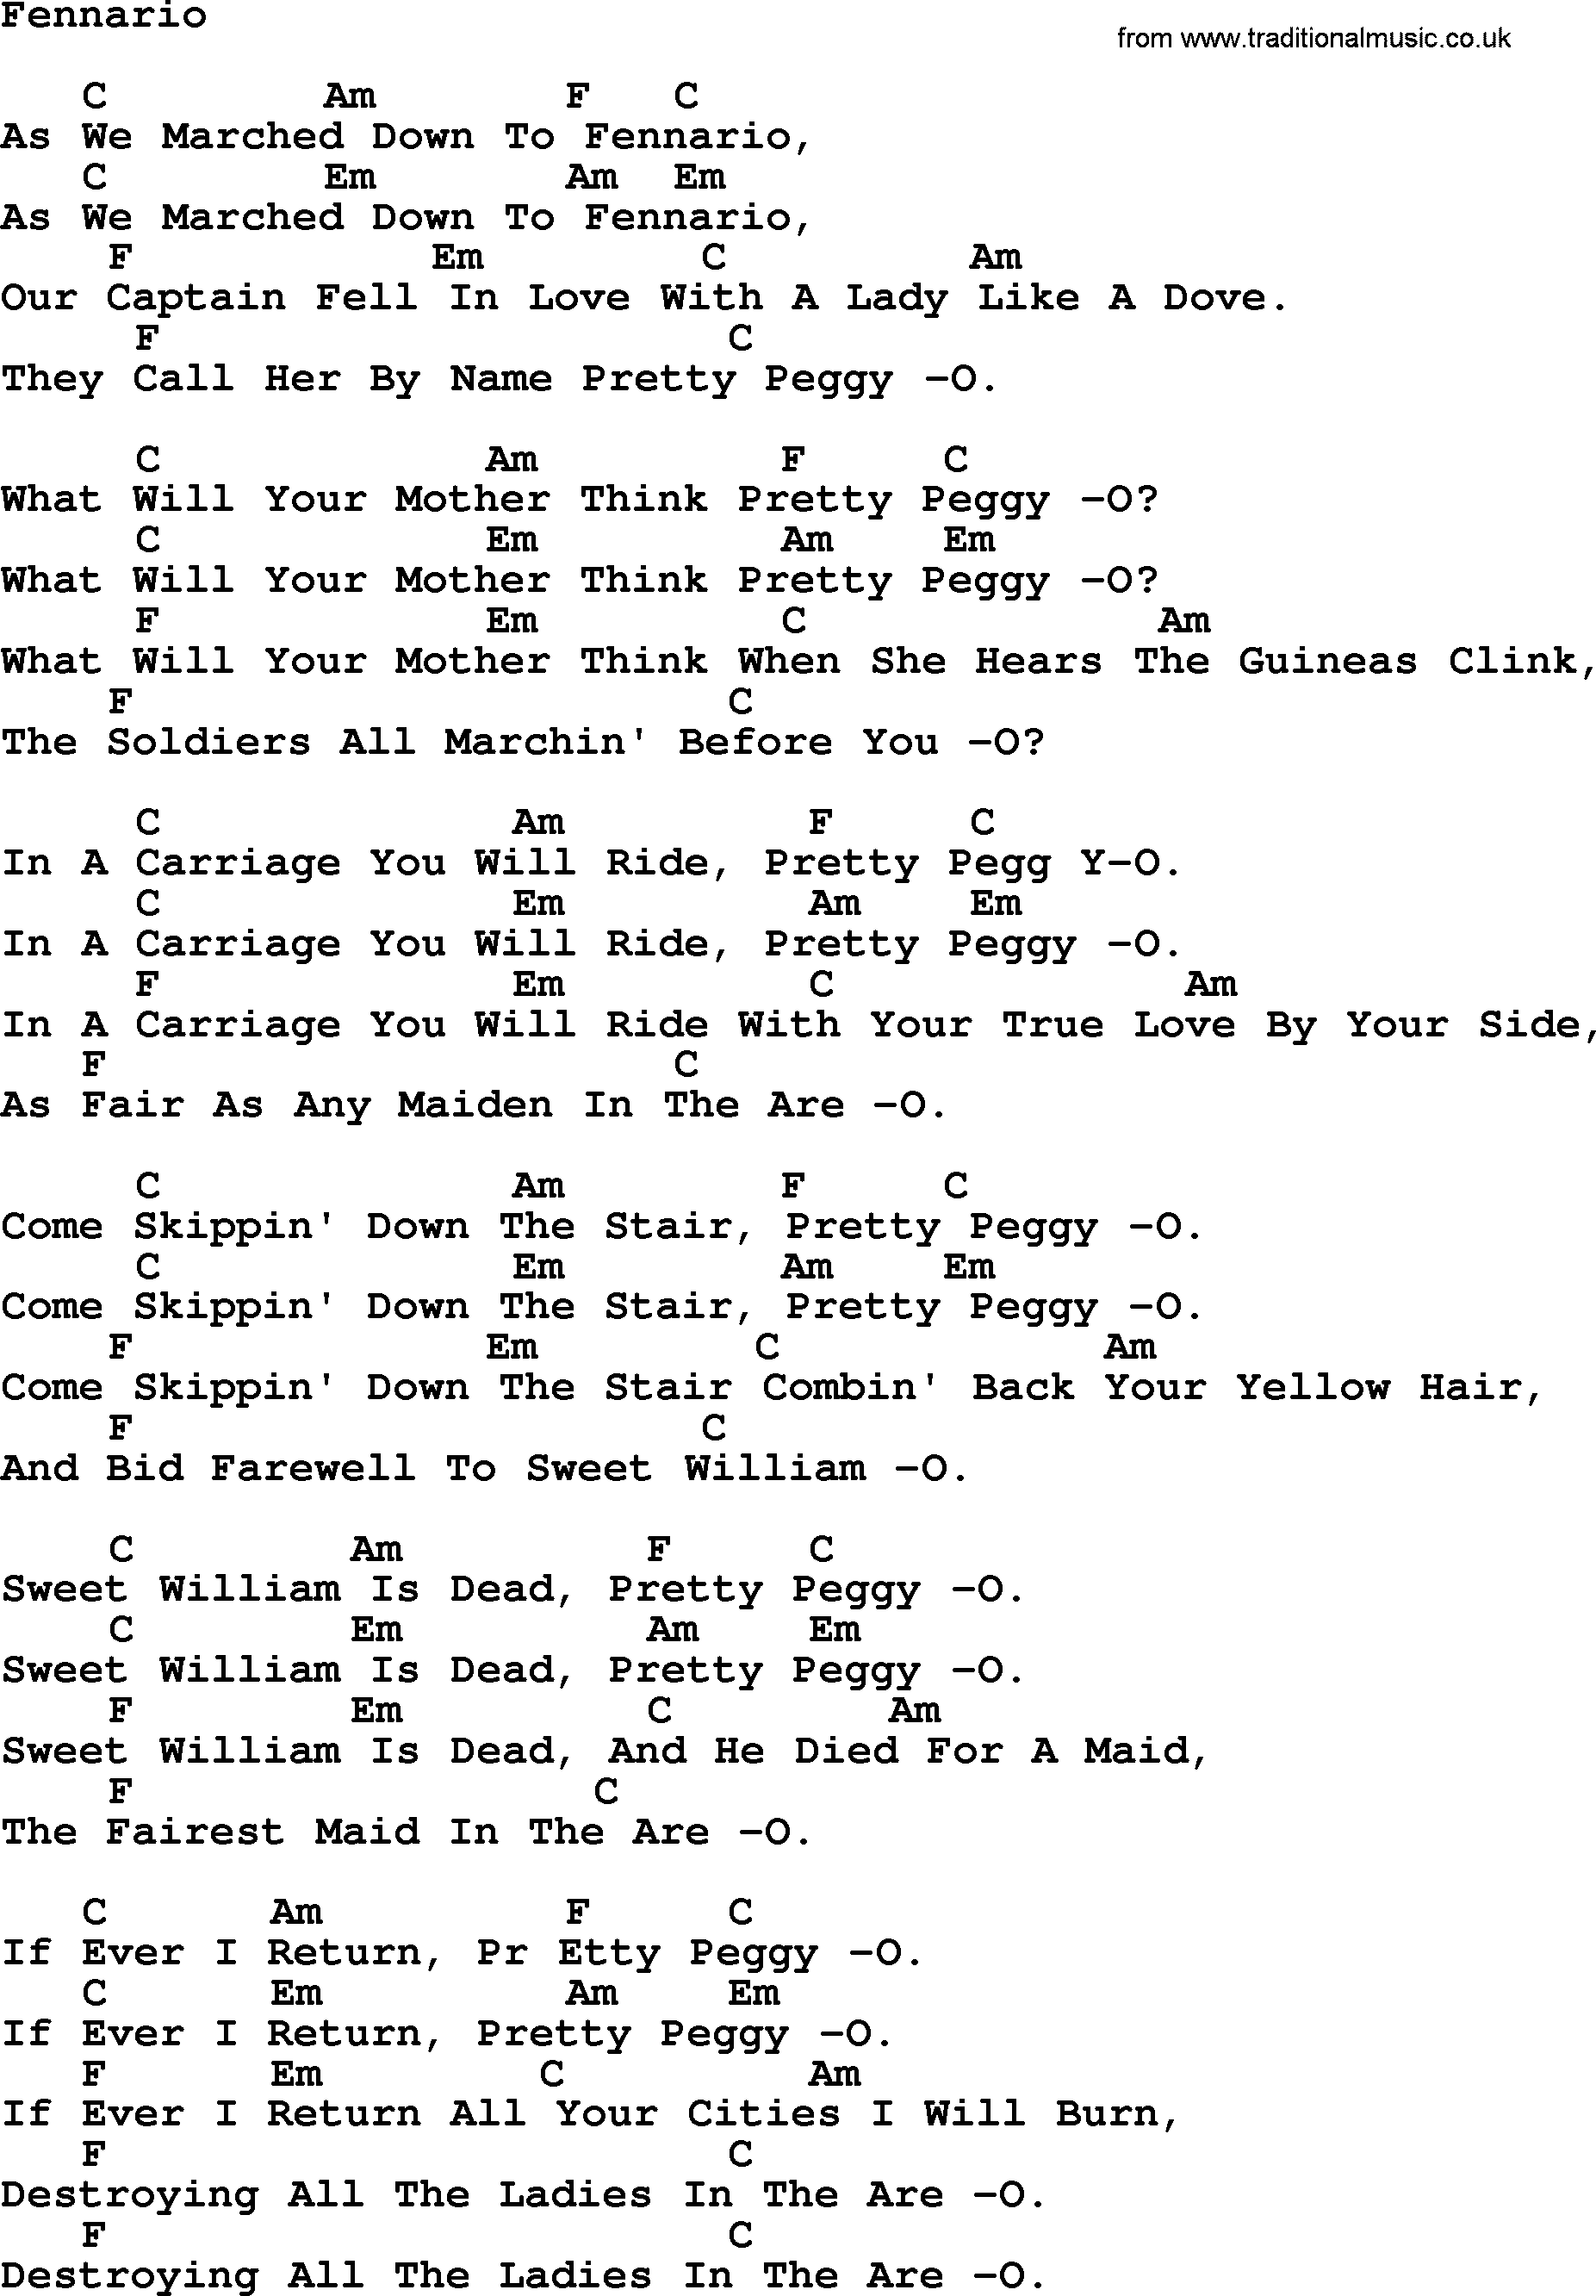 Joan Baez song Fennario lyrics and chords